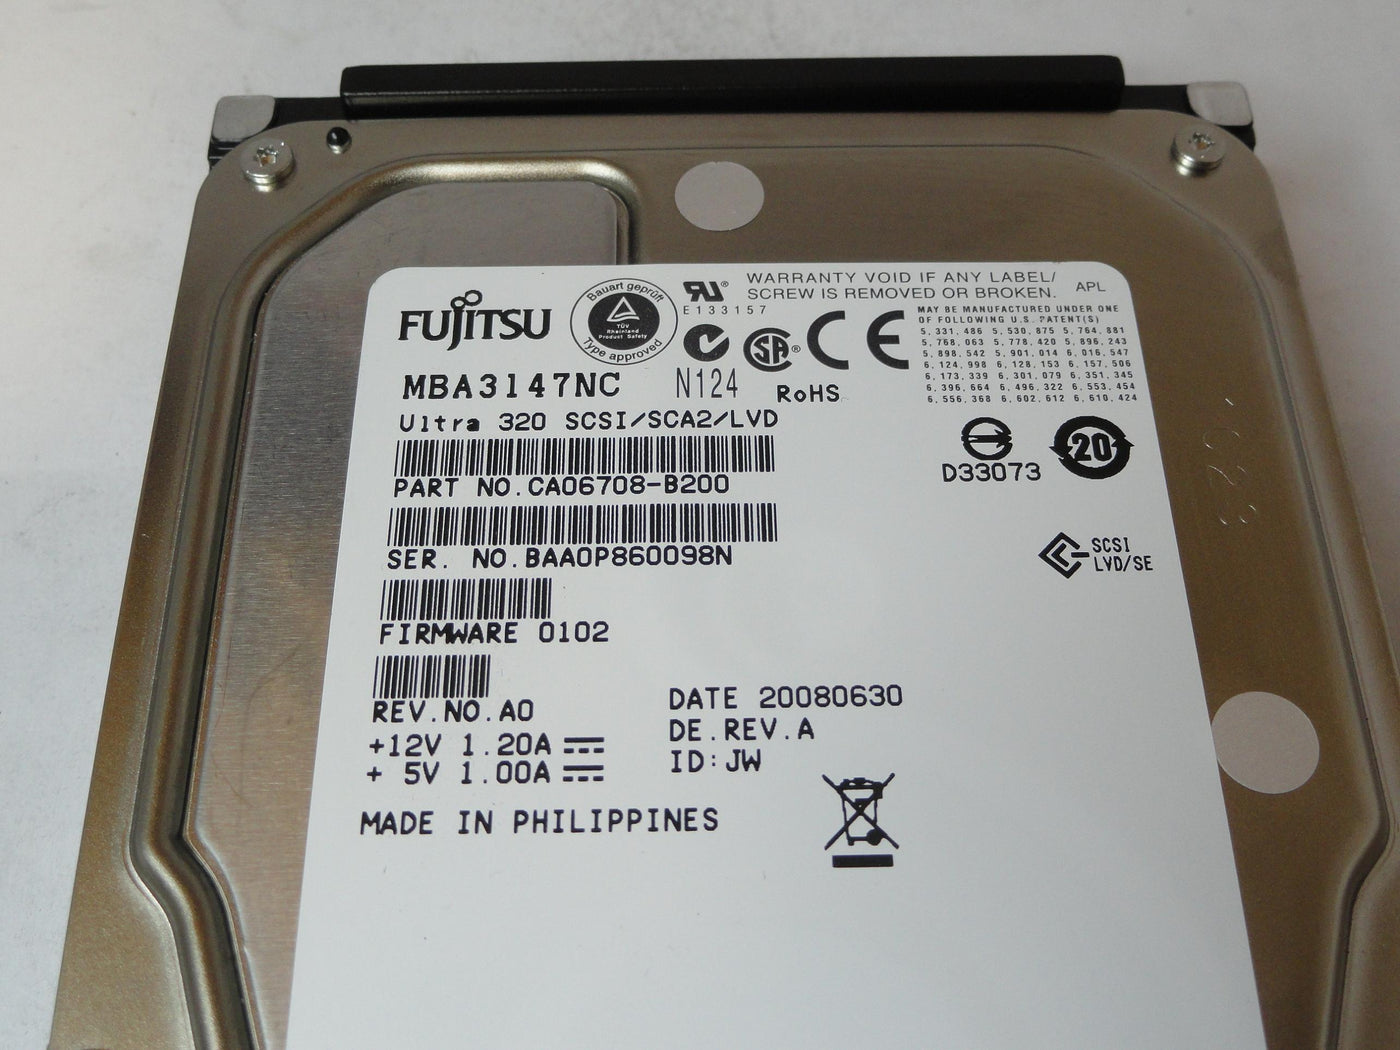 CA06708-B200 - Fujitsu 146Gb SCSI 80 Pin 15Krpm 3.5in HDD - Refurbished